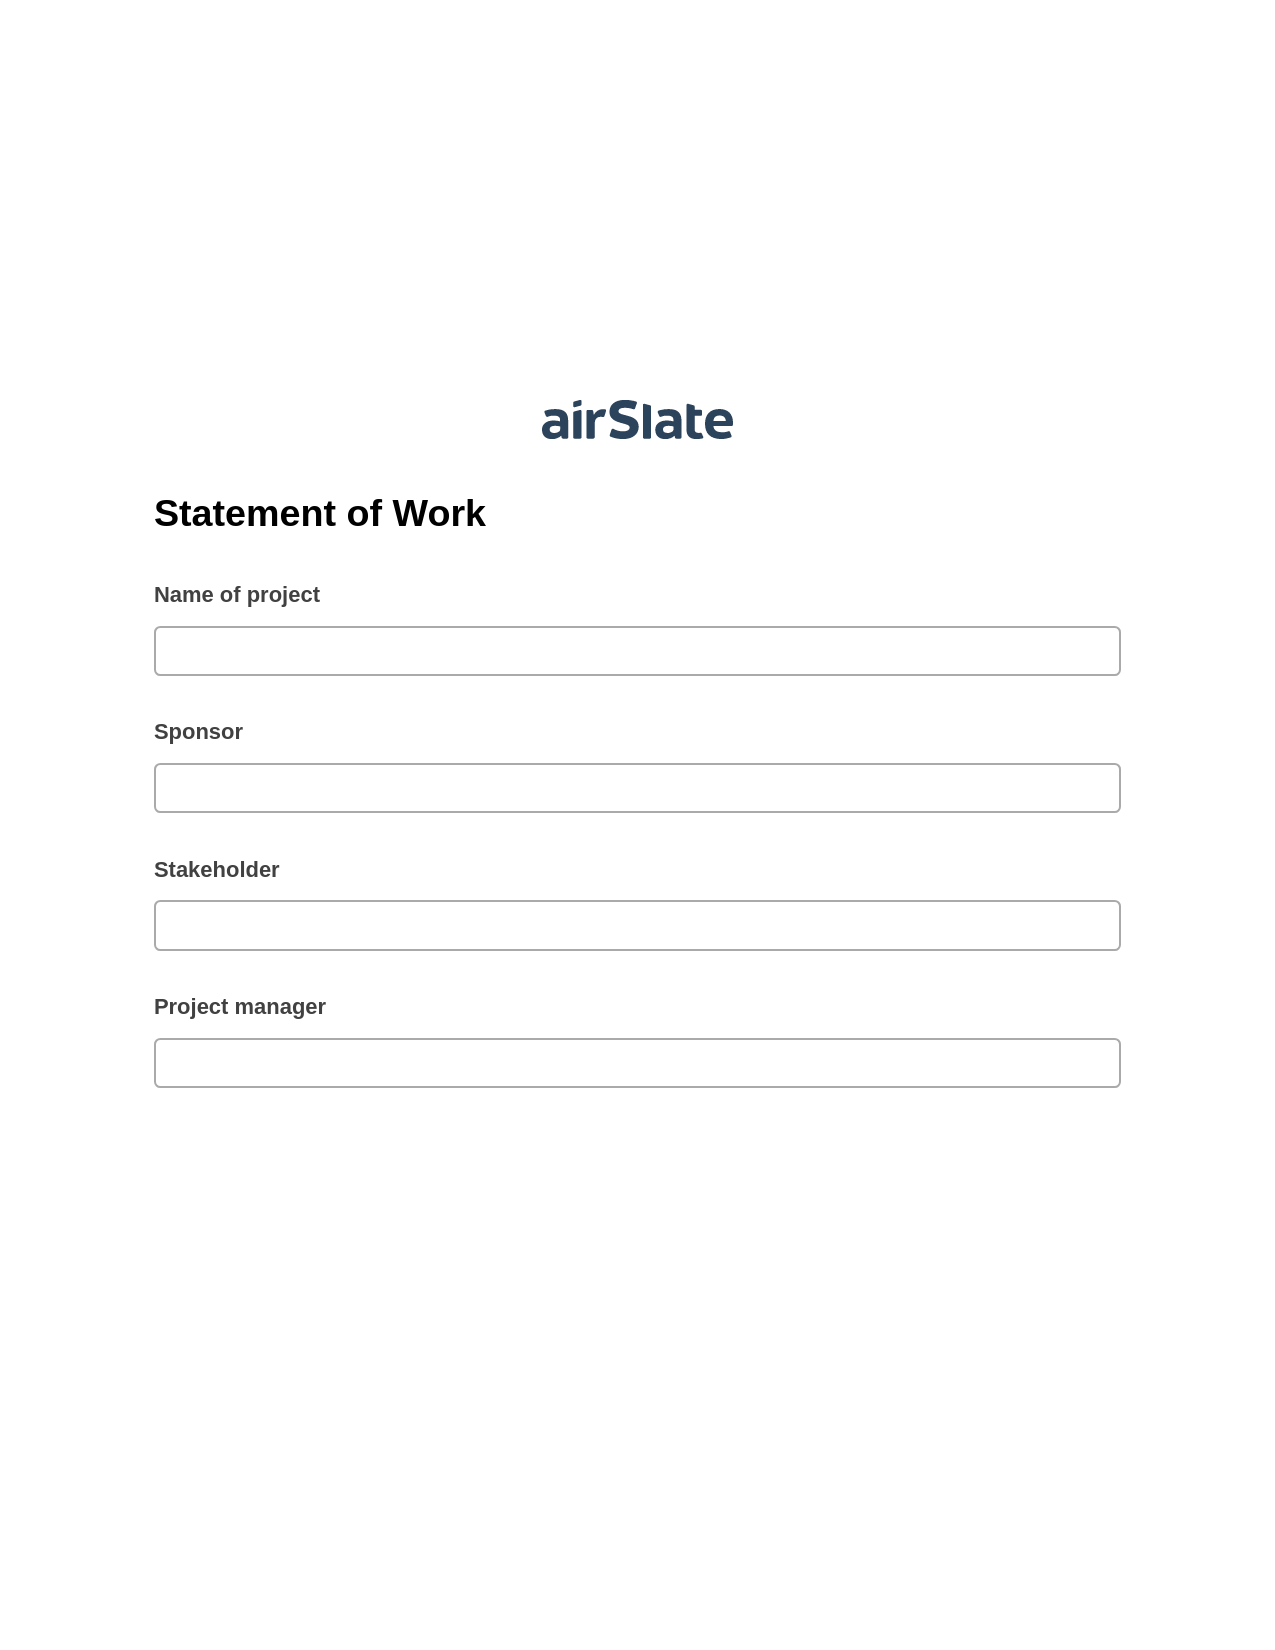 Statement of Work Pre-fill from Salesforce Record Bot, Google Cloud Print Bot, Slack Notification Postfinish Bot